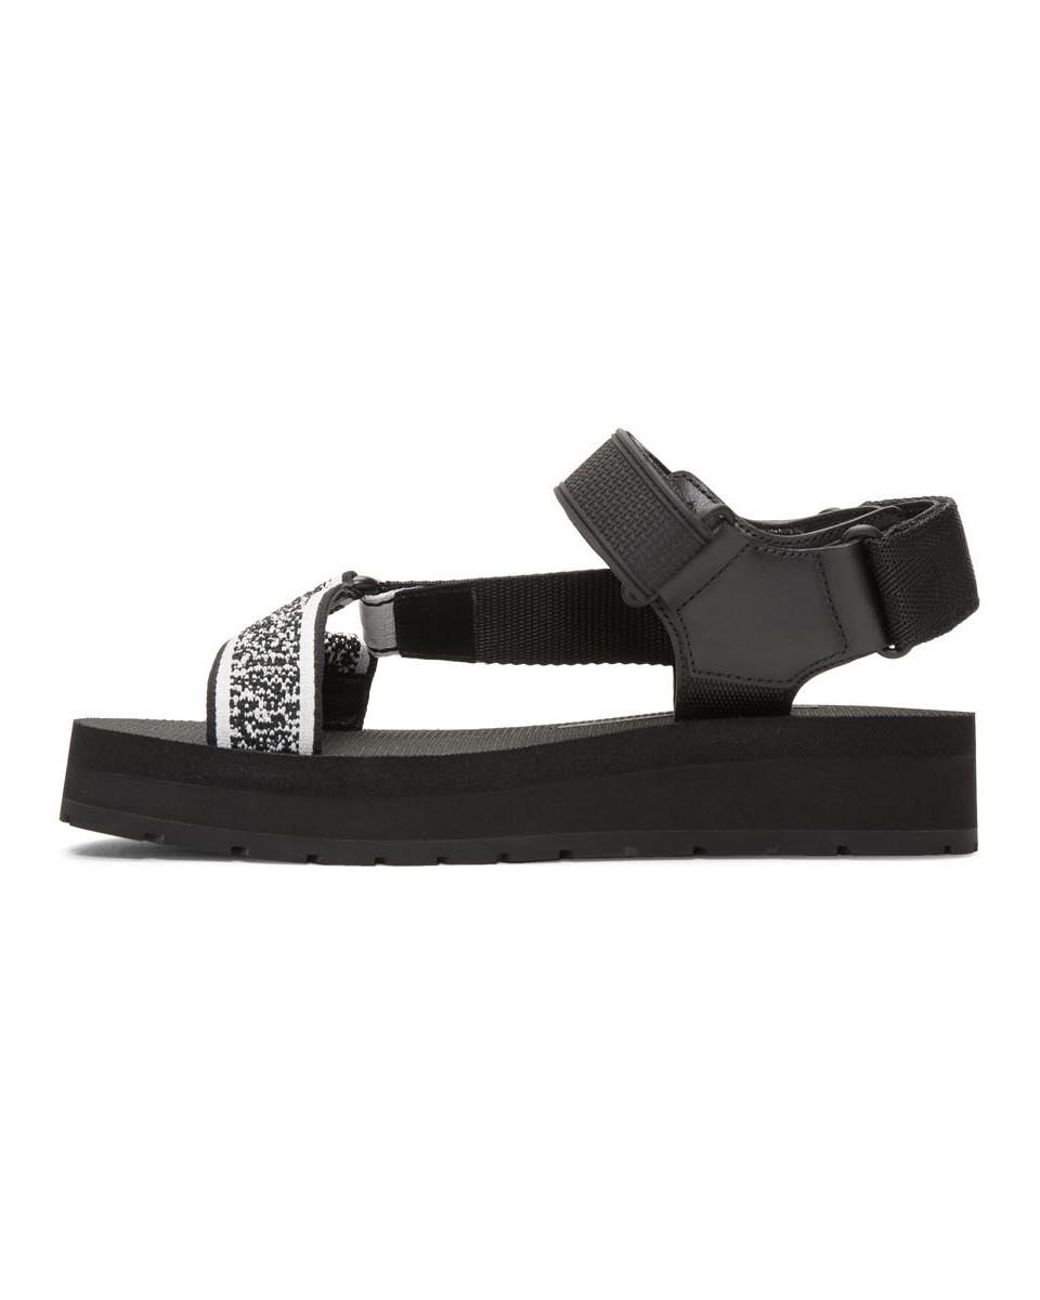 Prada Leather Black And White Velcro Nomad Sandals | Lyst